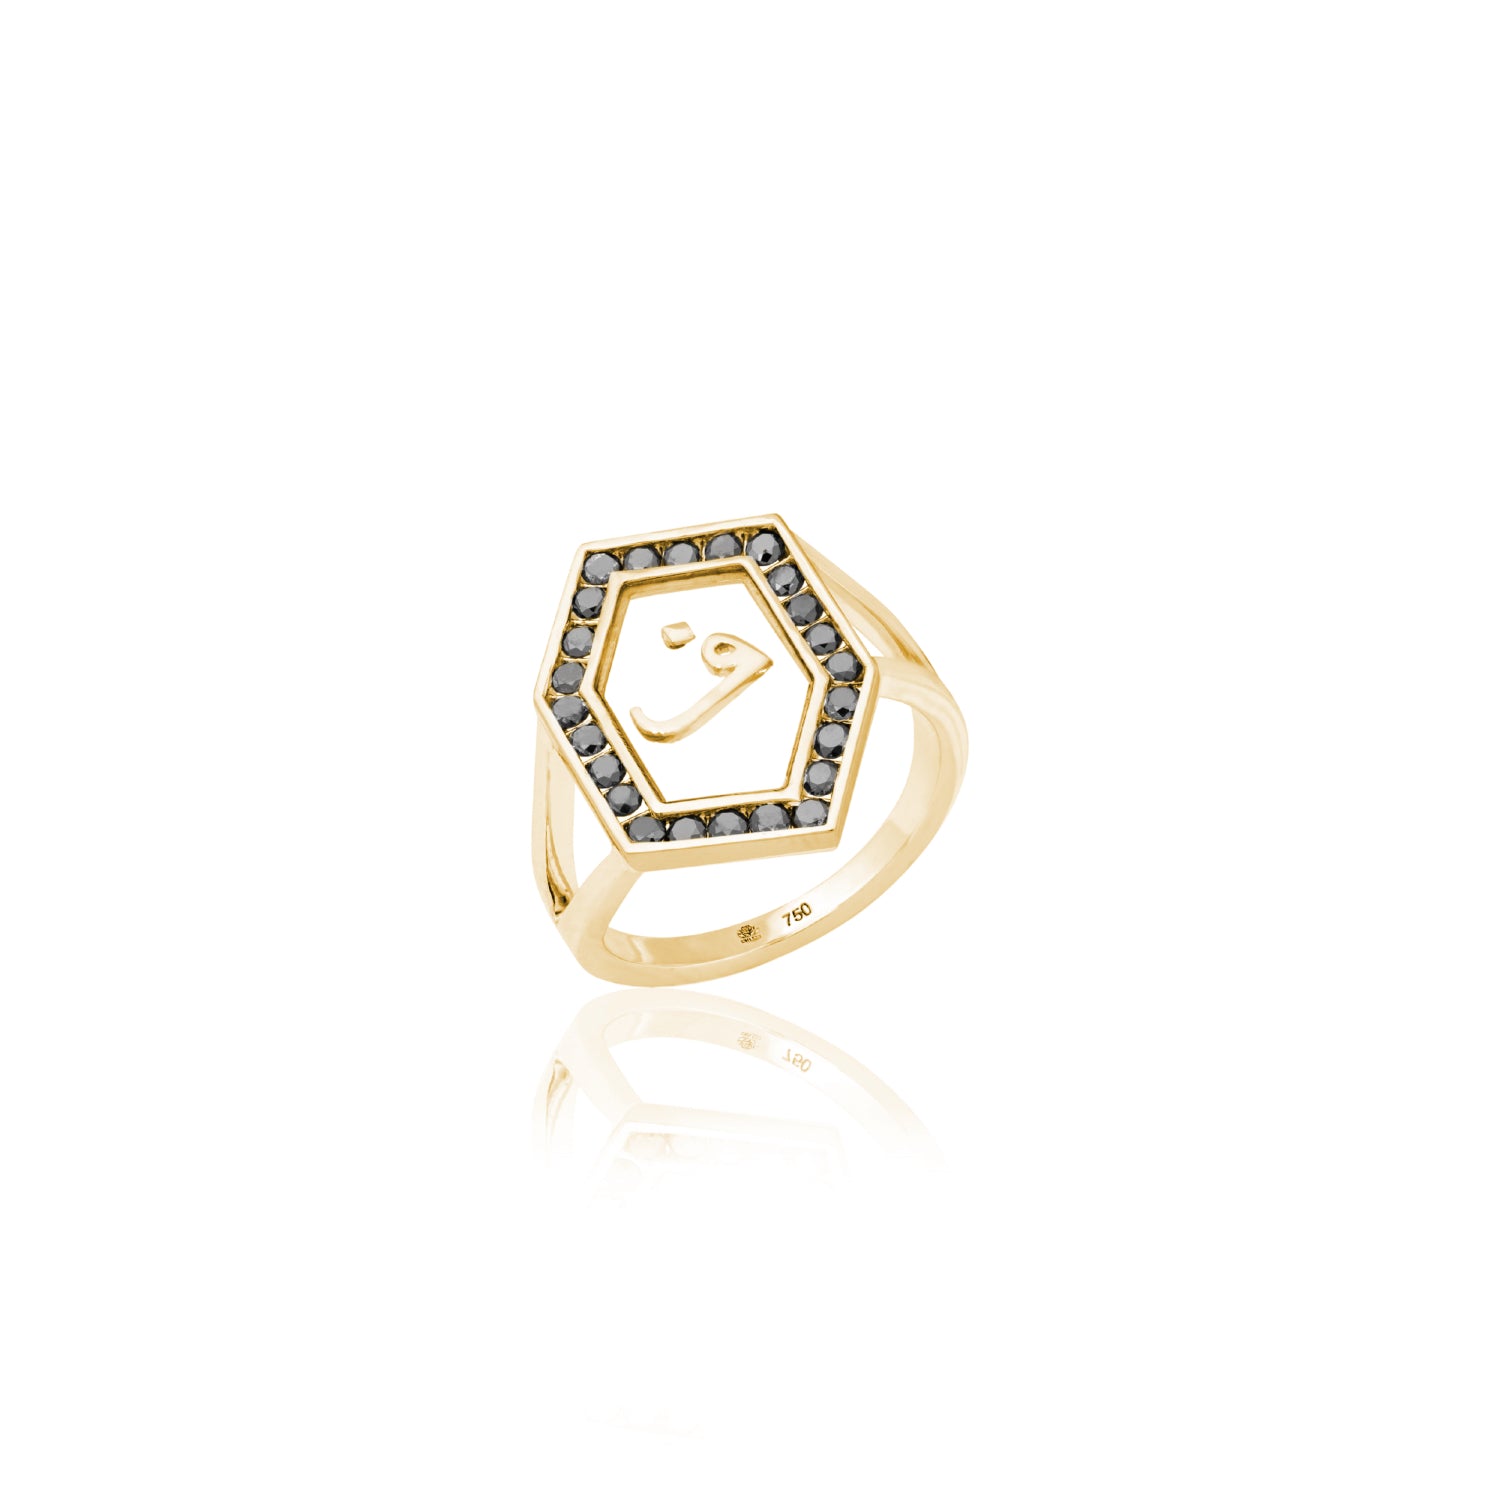 Qamoos 1.0 Letter ف Black Diamond Ring in Yellow Gold